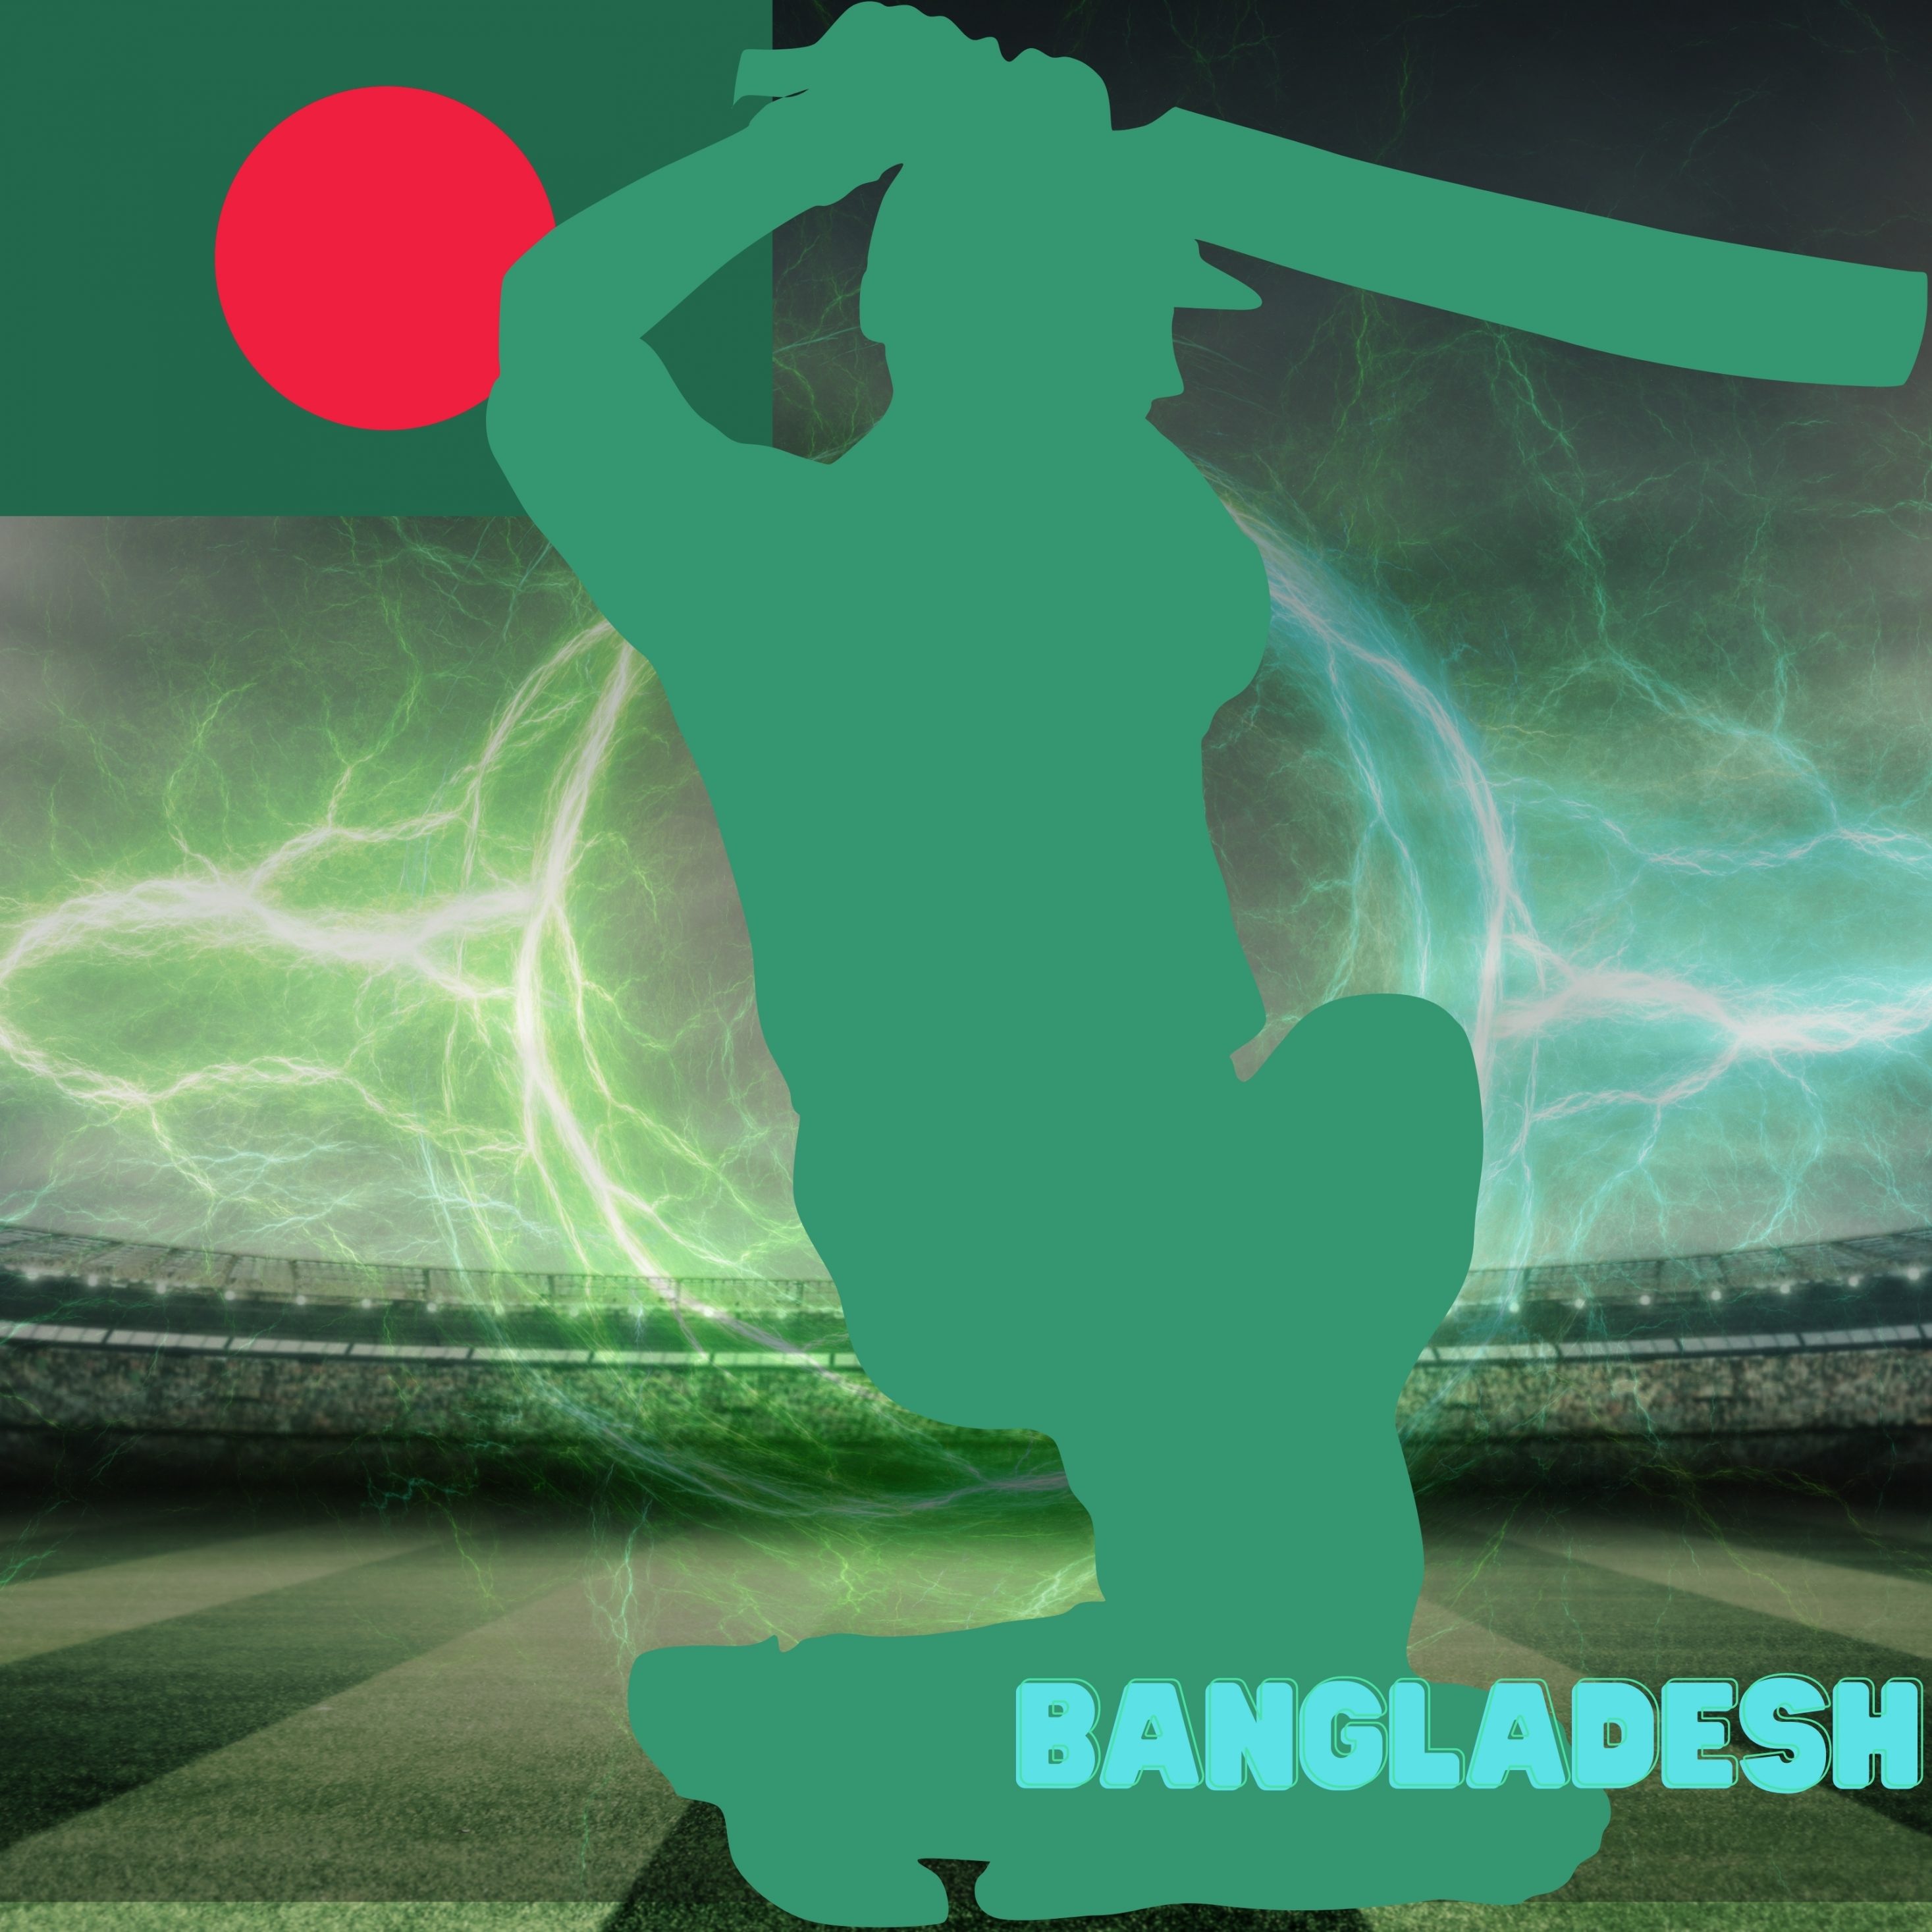 2934x2934 iOS iPad wallpaper 4k Bangladesh Cricket Stadium iPad Wallpaper 2934x2934 pixels resolution